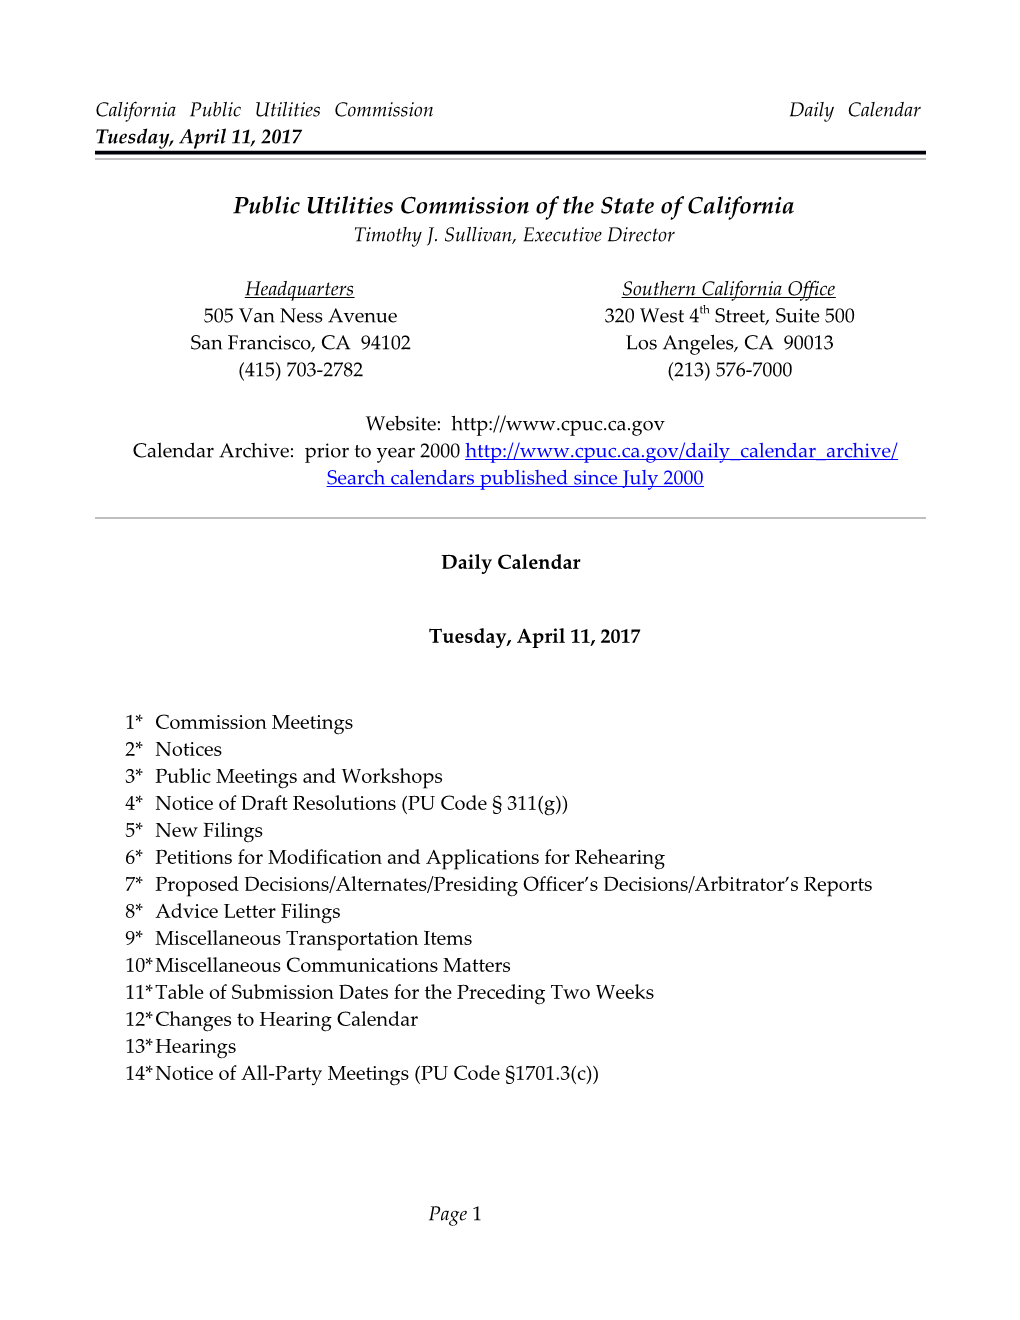 California Public Utilities Commission Daily Calendar Tuesday, April 11, 2017